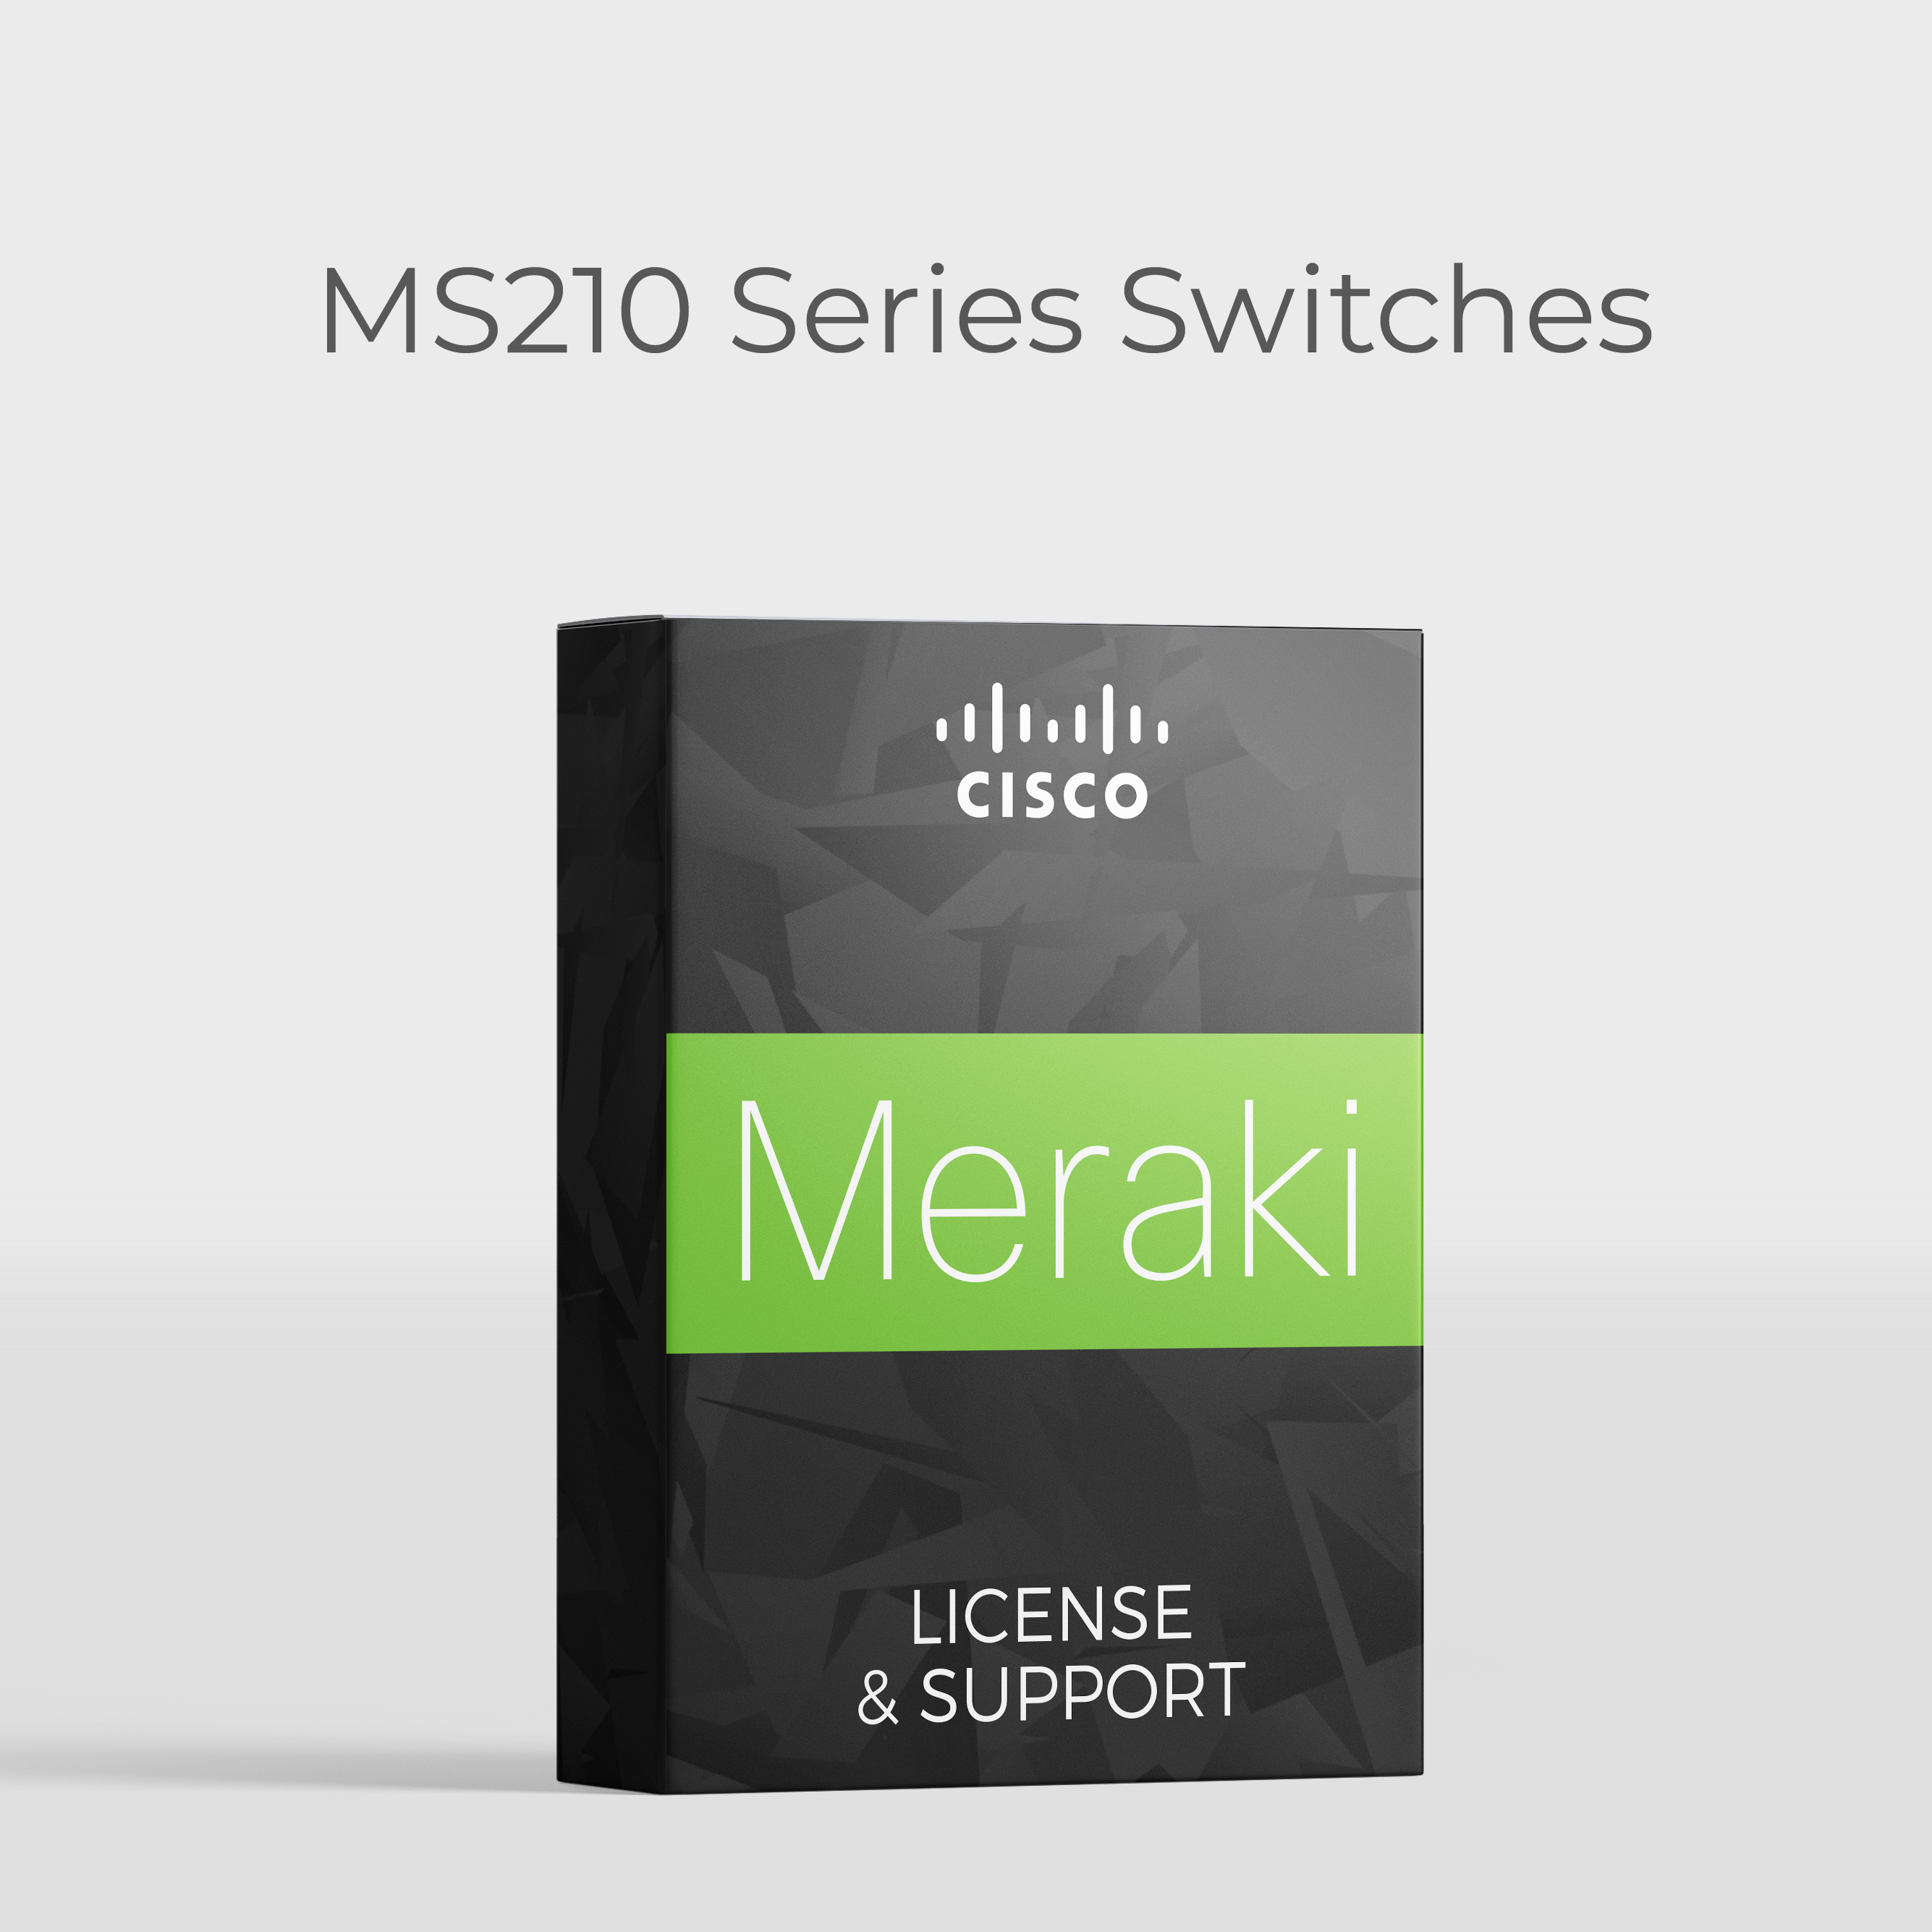 Meraki MS210-48 cloud managed switch Gigabit switch with Enterprise License